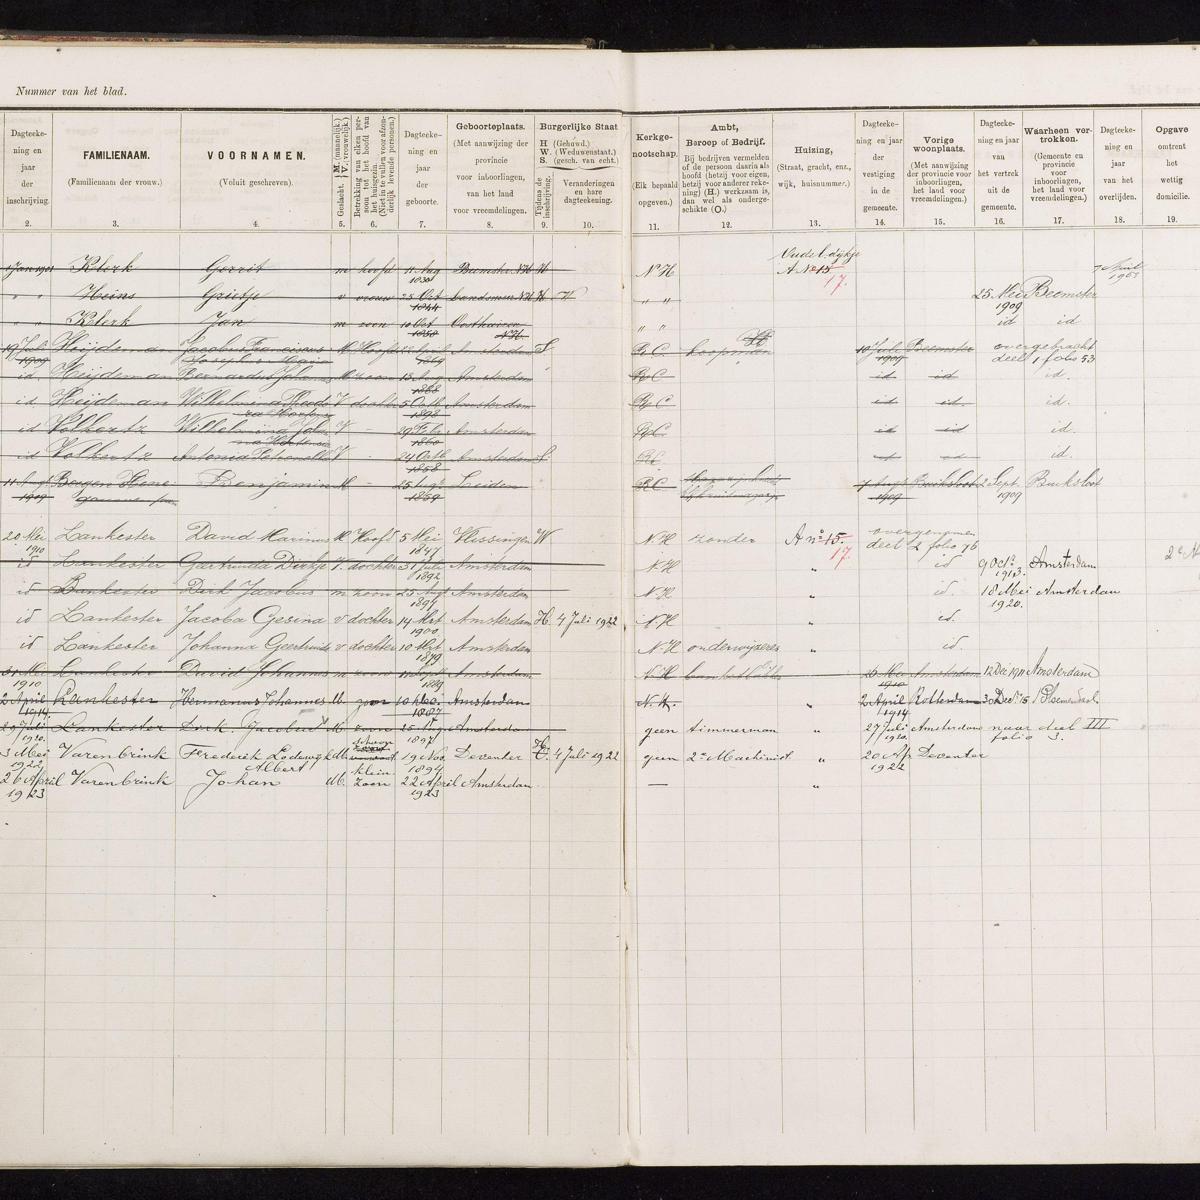 Civil registry, Ilpendam, 1850-1923, part 32, sheet 35